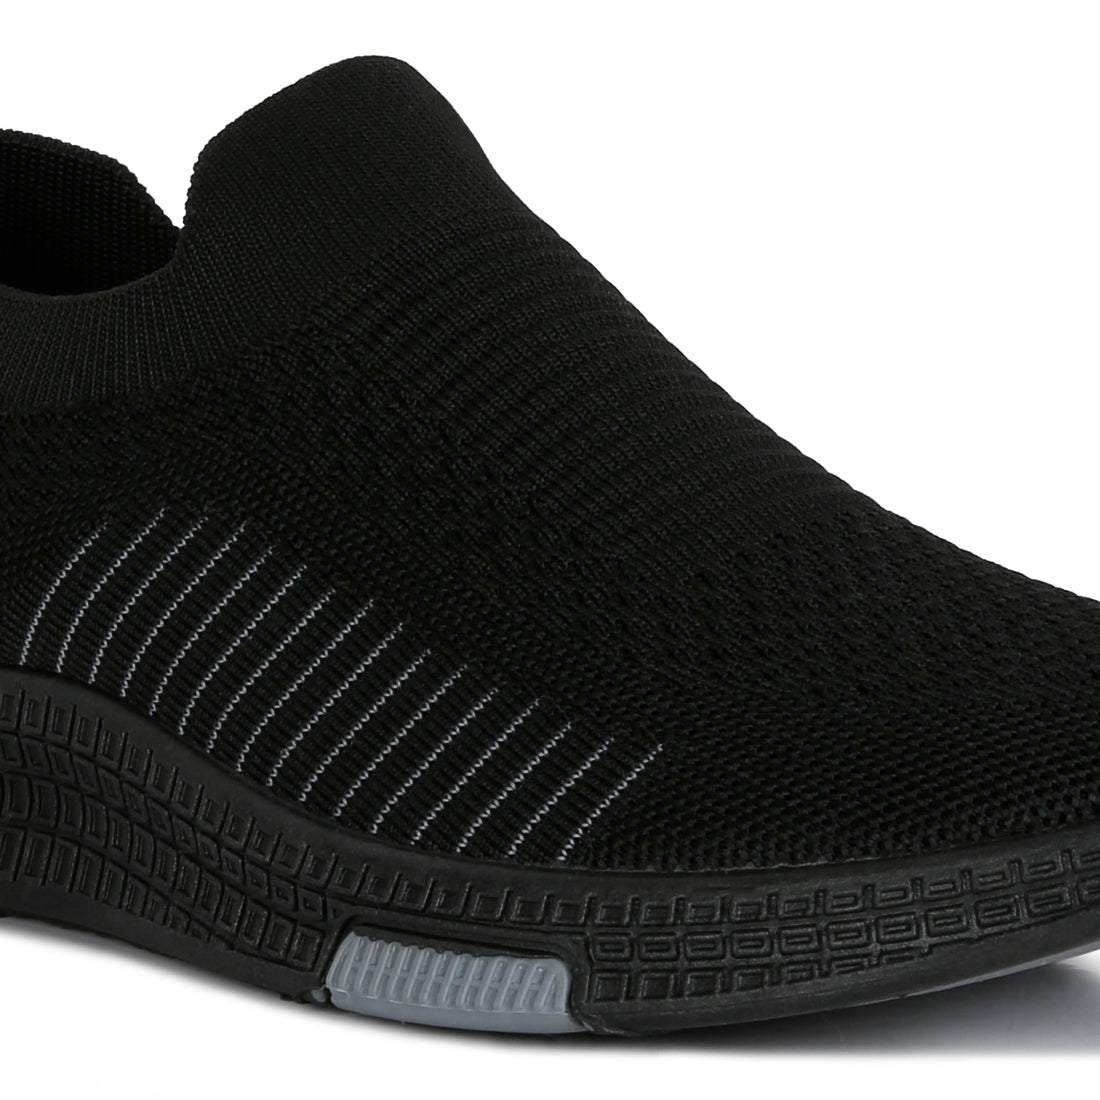 Men's Plumers Knitted Slip On Walking Shoes